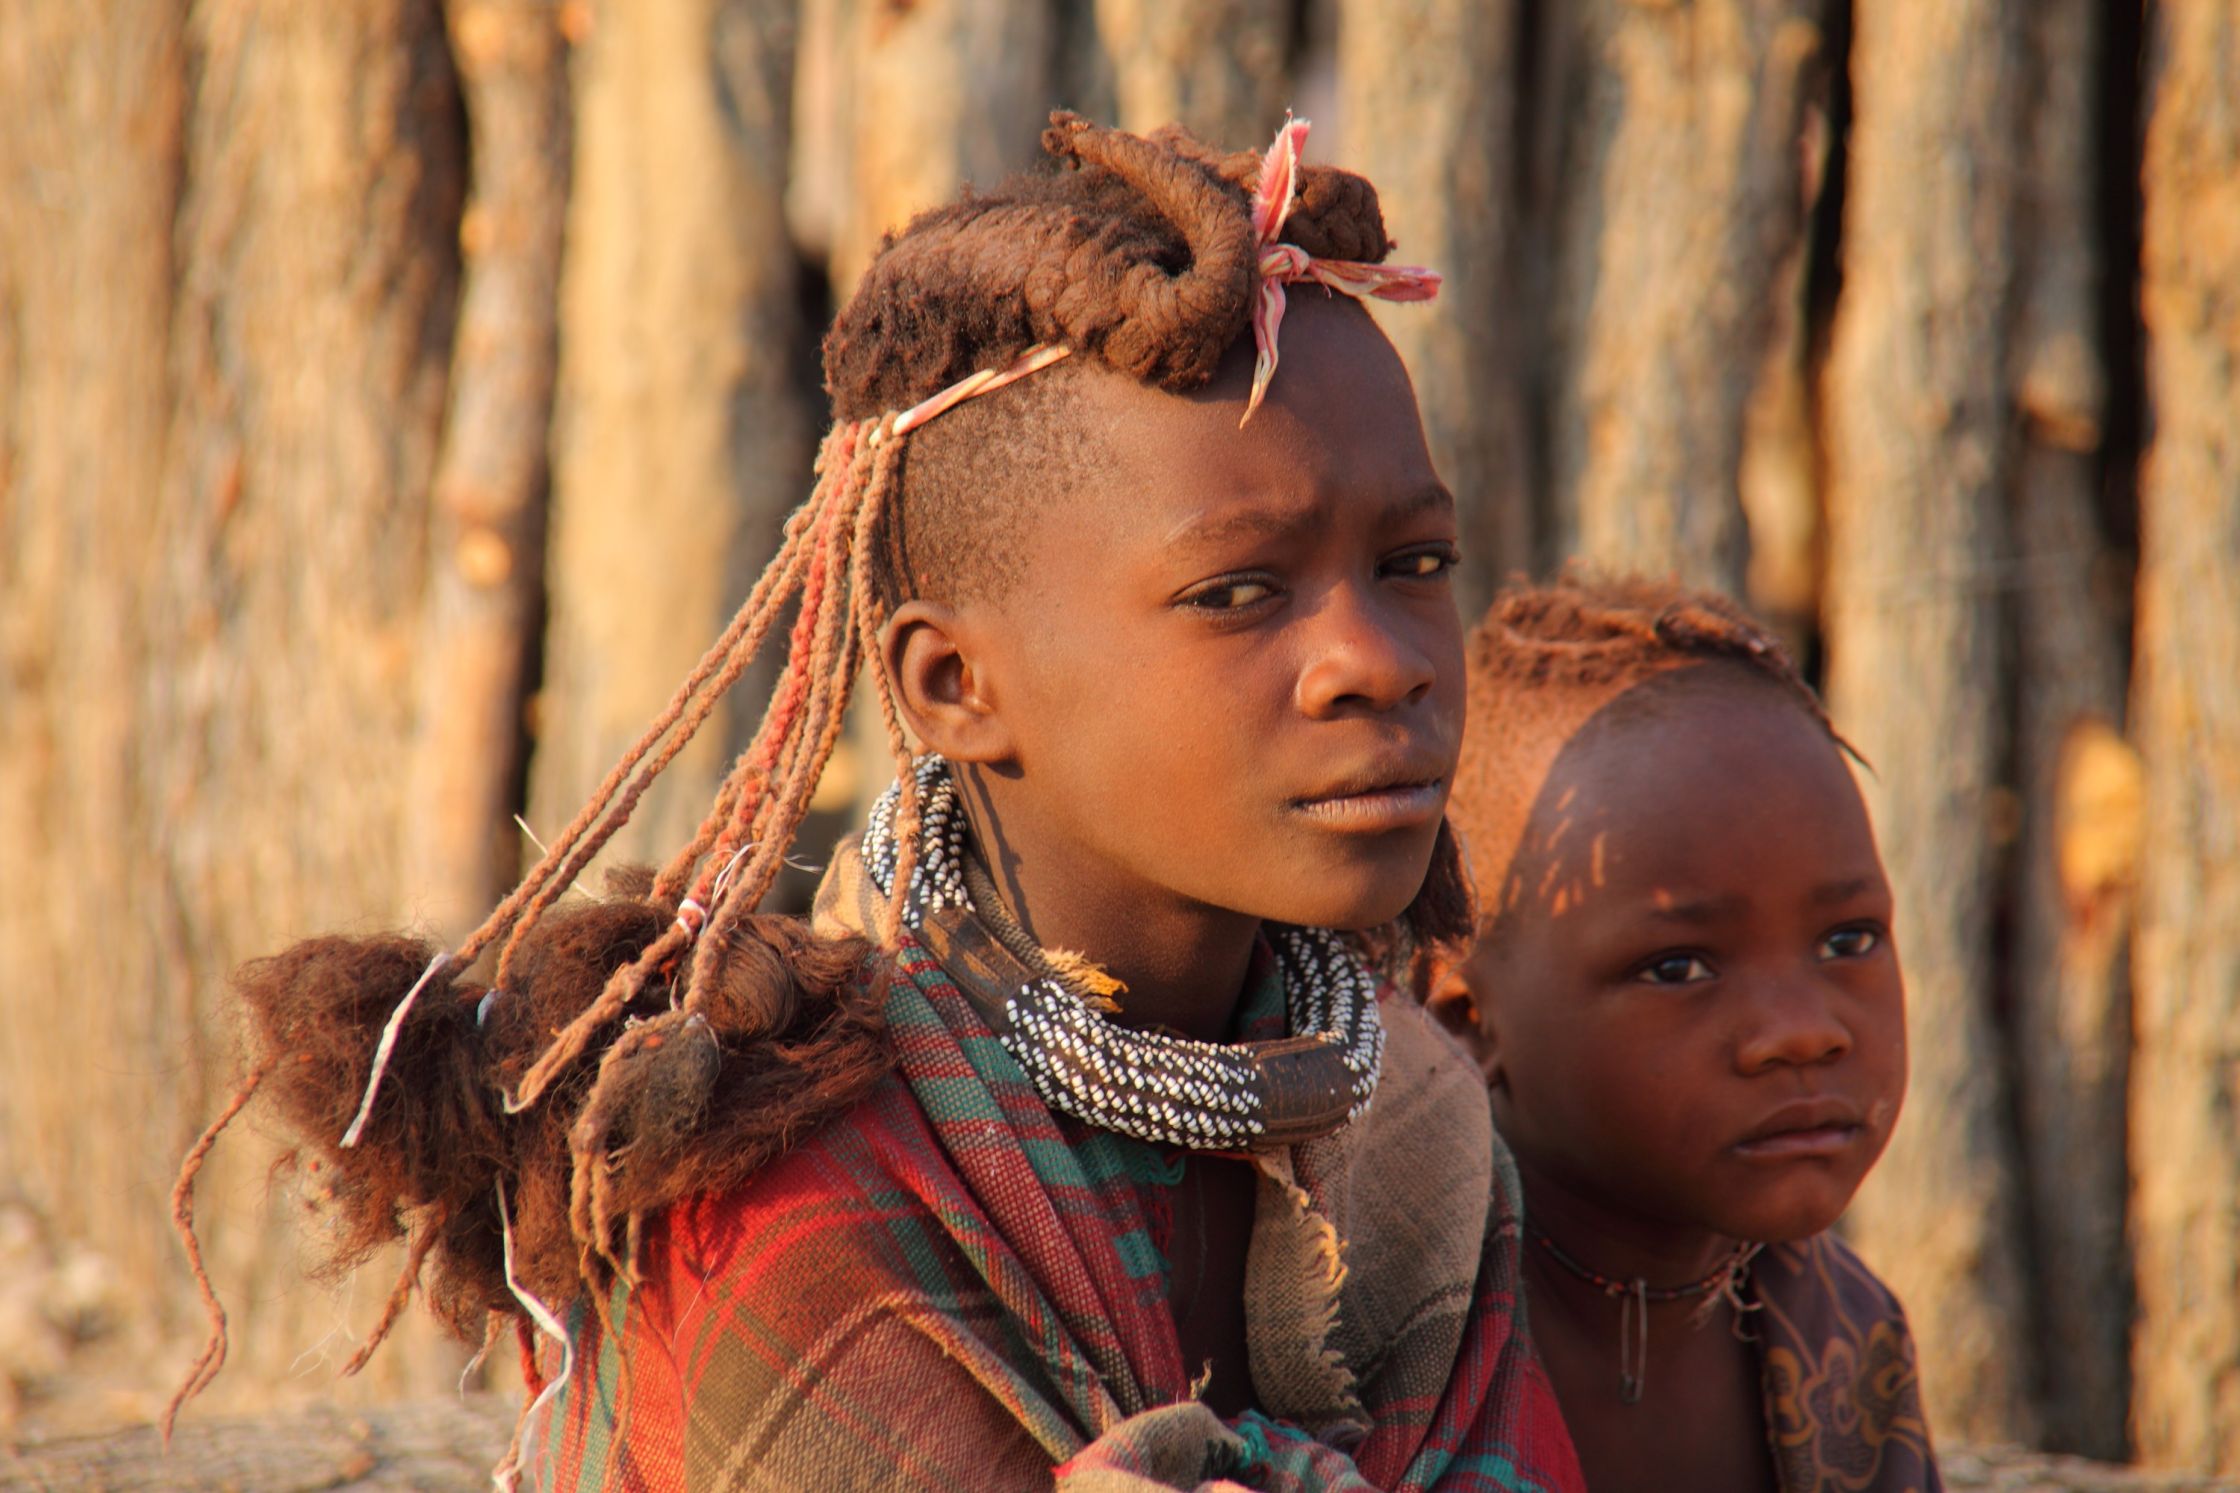 Tribe himba black. Химба Намибия. Племя Химба. Племя Химба в Намибии. Племя Химба в Африке.